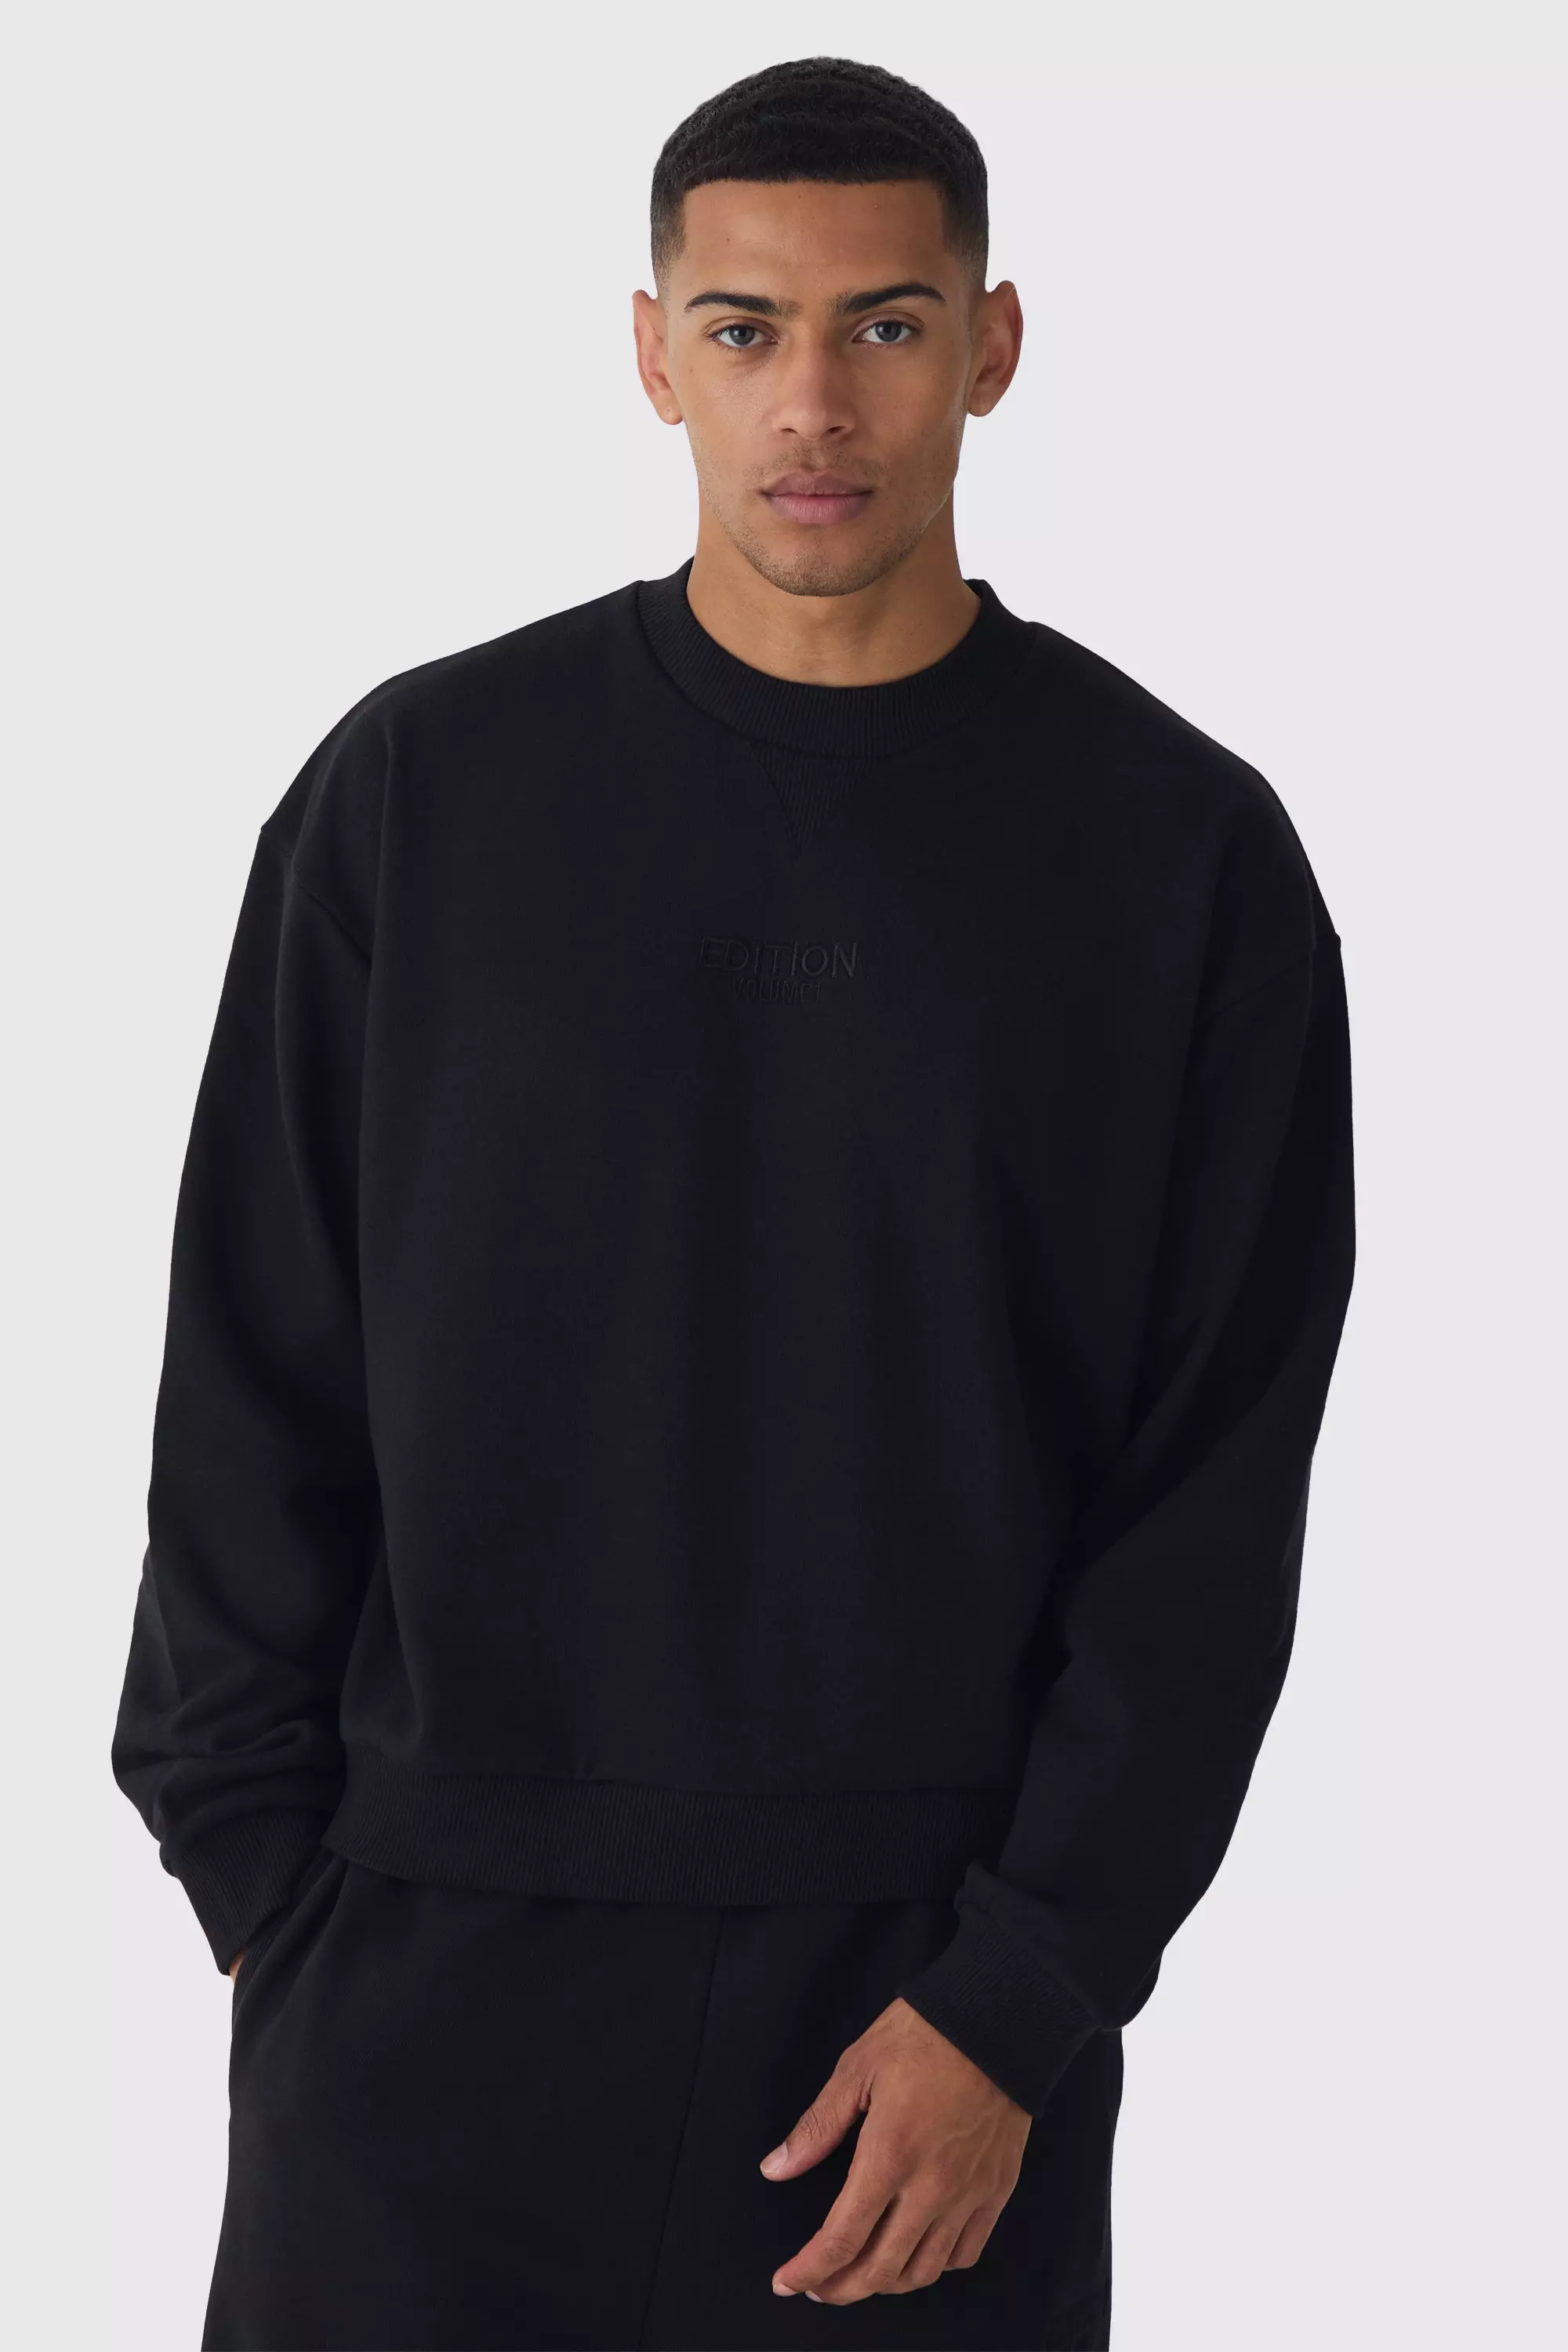 Black Oversized Extended Neck Heavyweight Sweatshirt